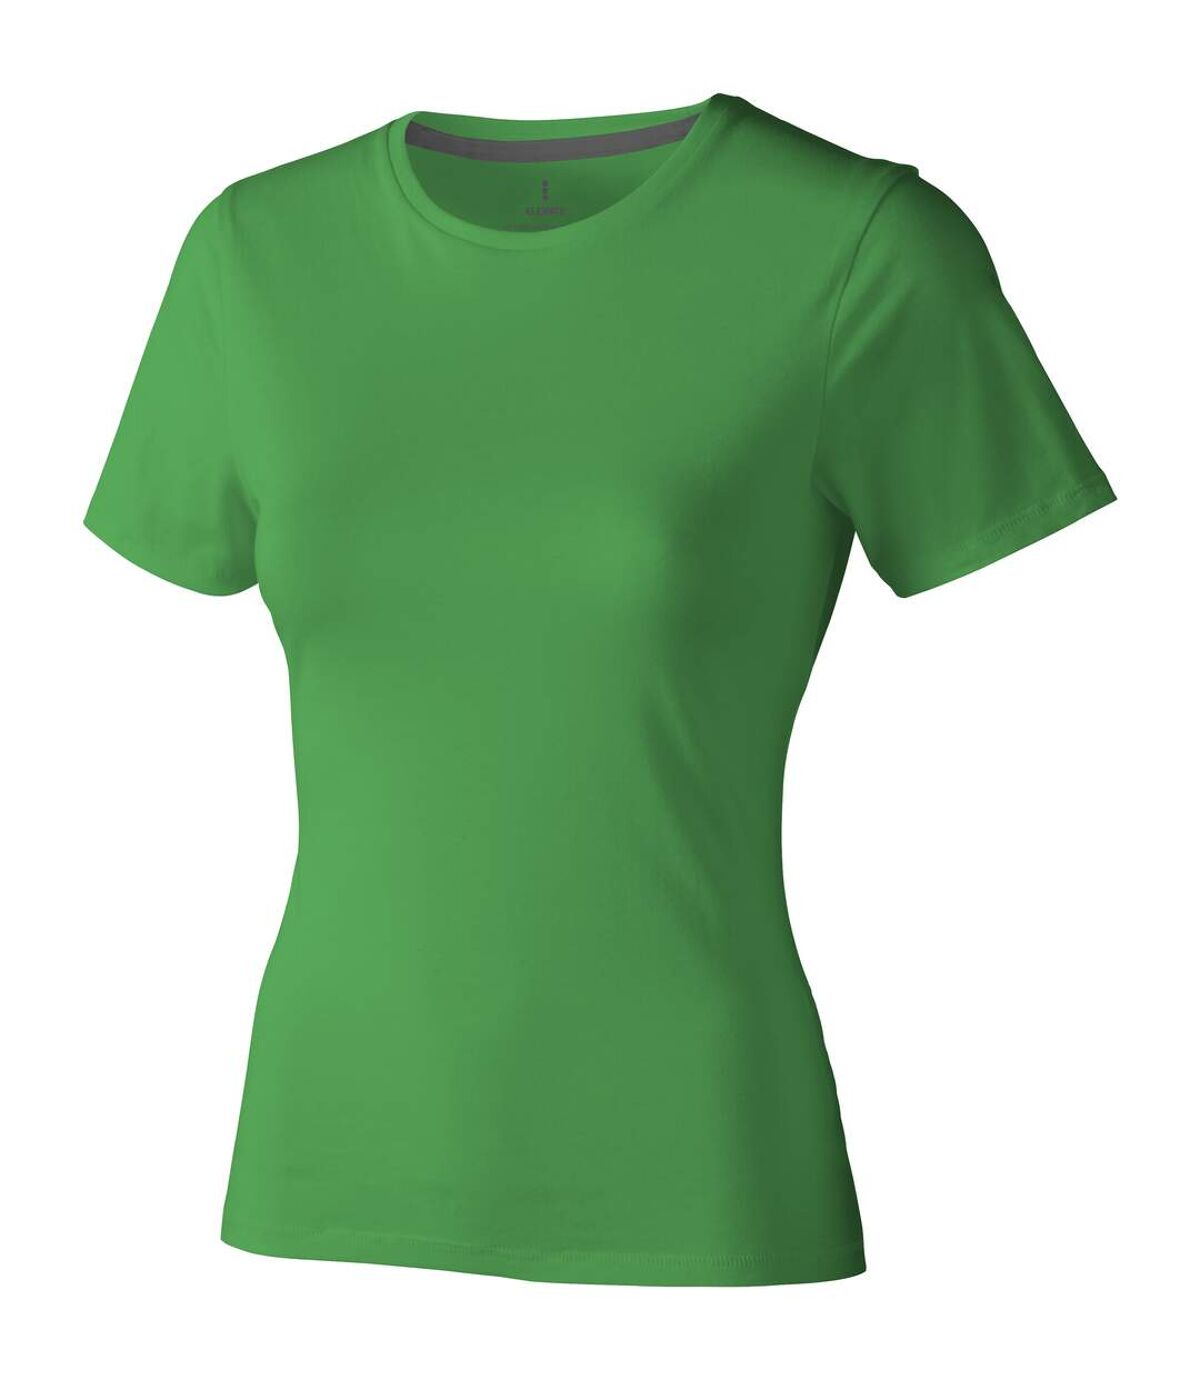 Elevate - T-shirt manches courtes Nanaimo - Femme (Vert fougère) - UTPF1808